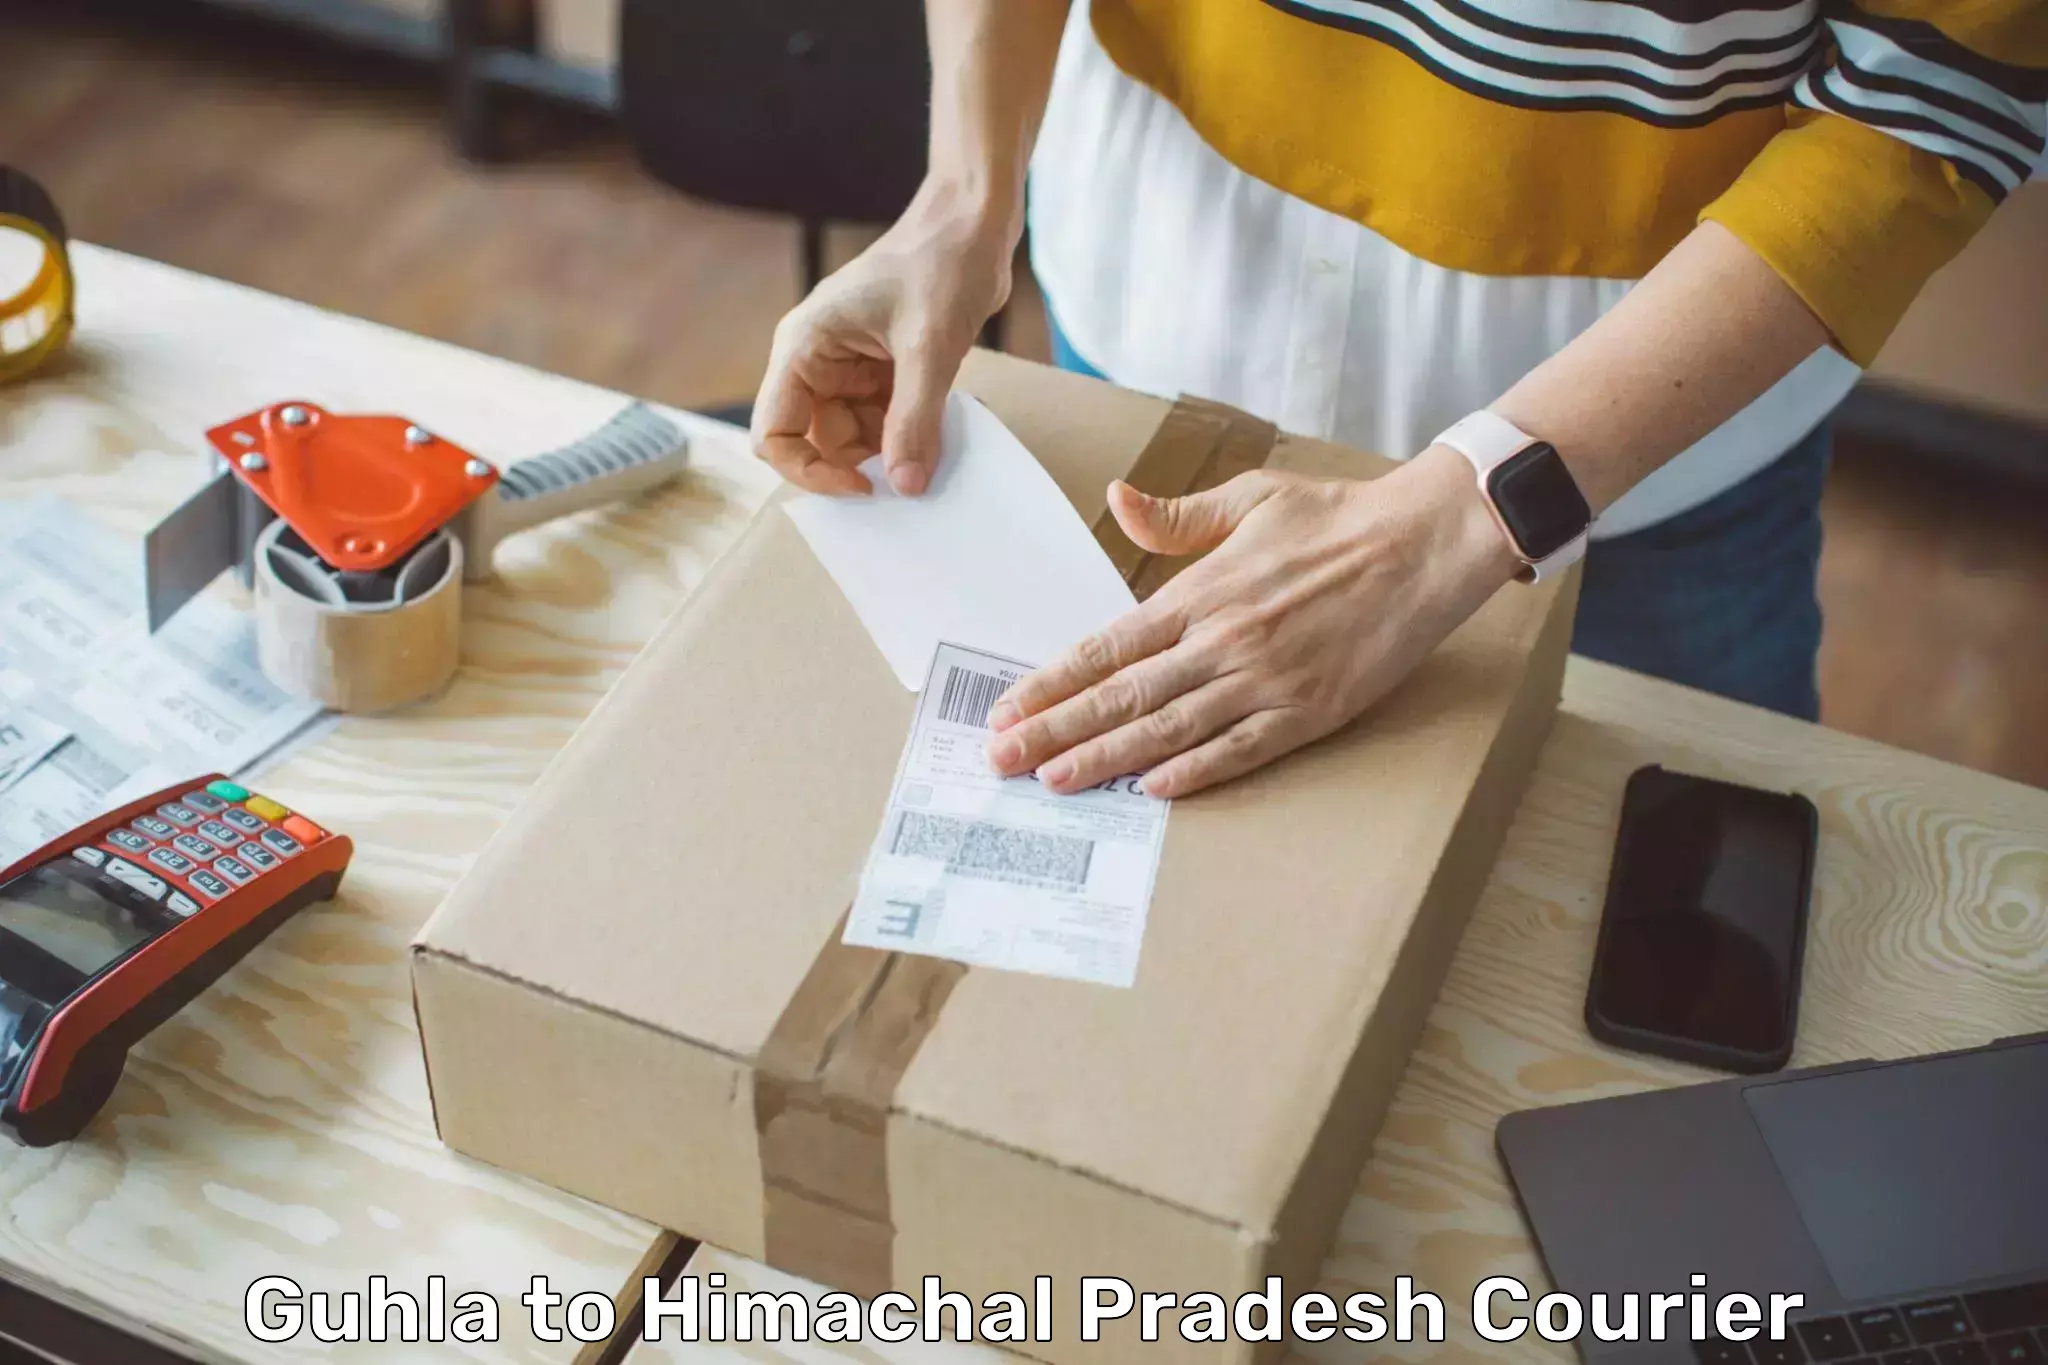 Courier service partnerships Guhla to Himachal Pradesh